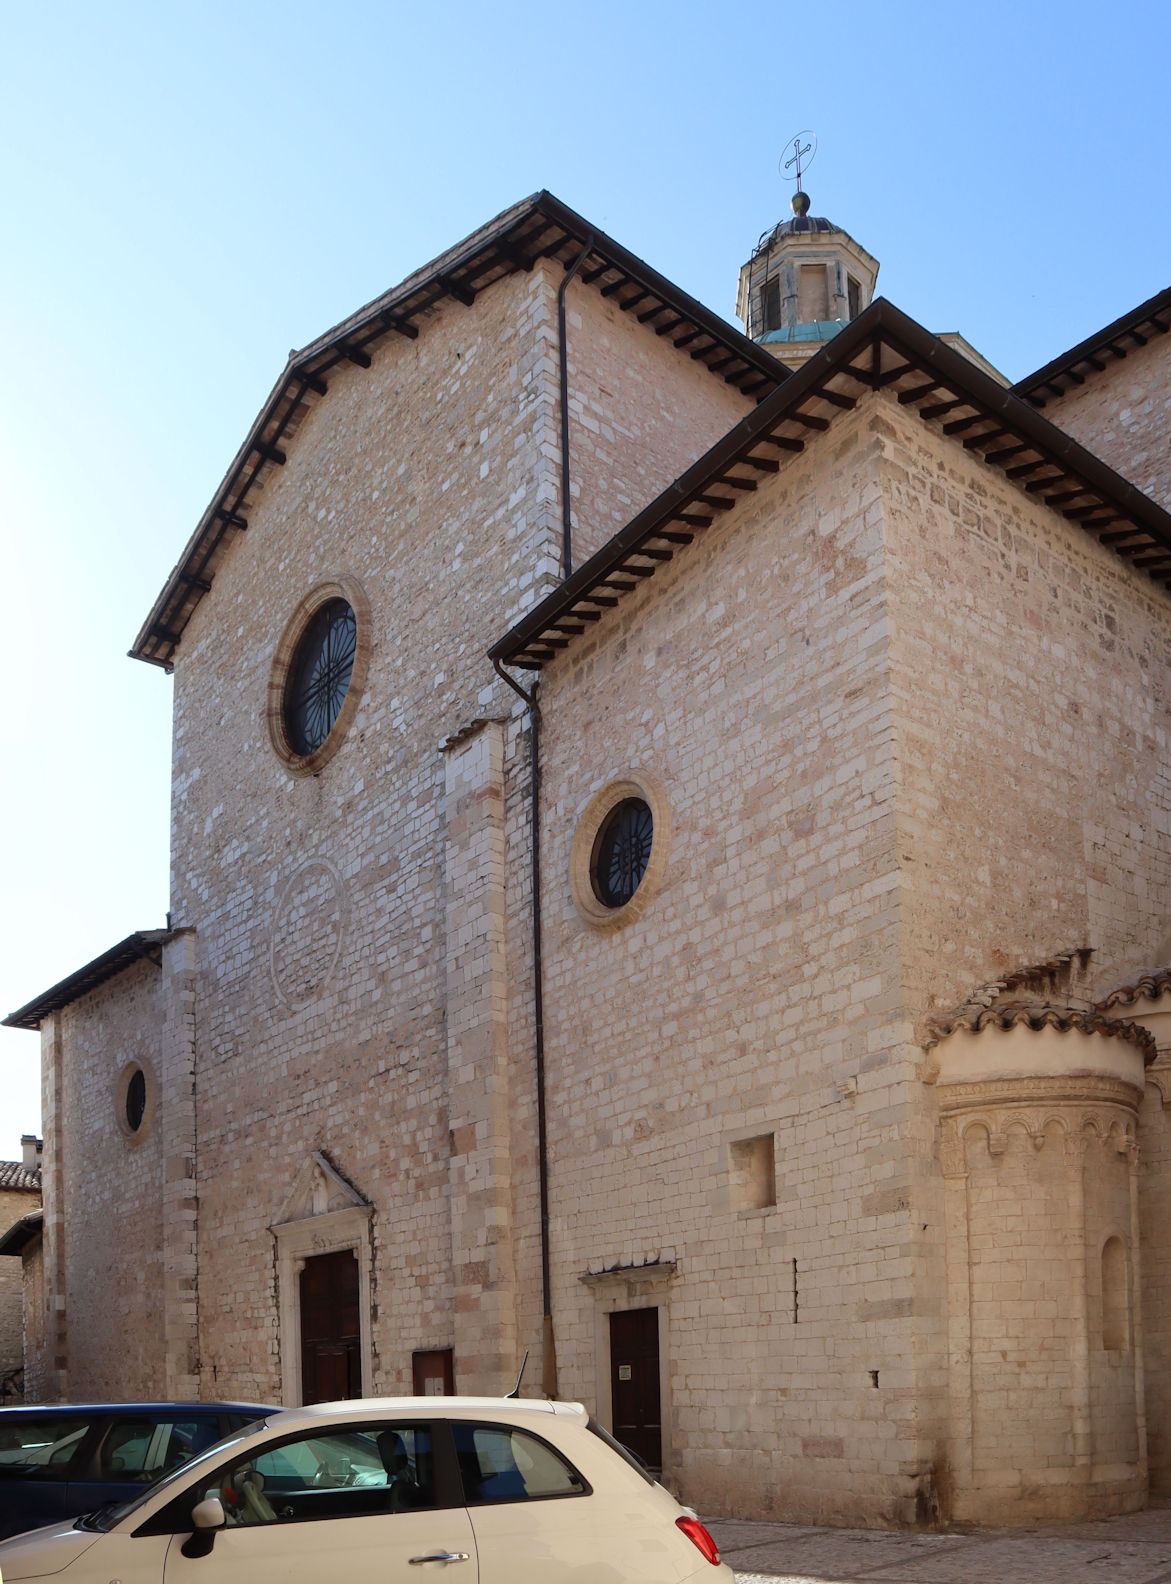 die Ämilianus geweihte Kathedrale in Trevi